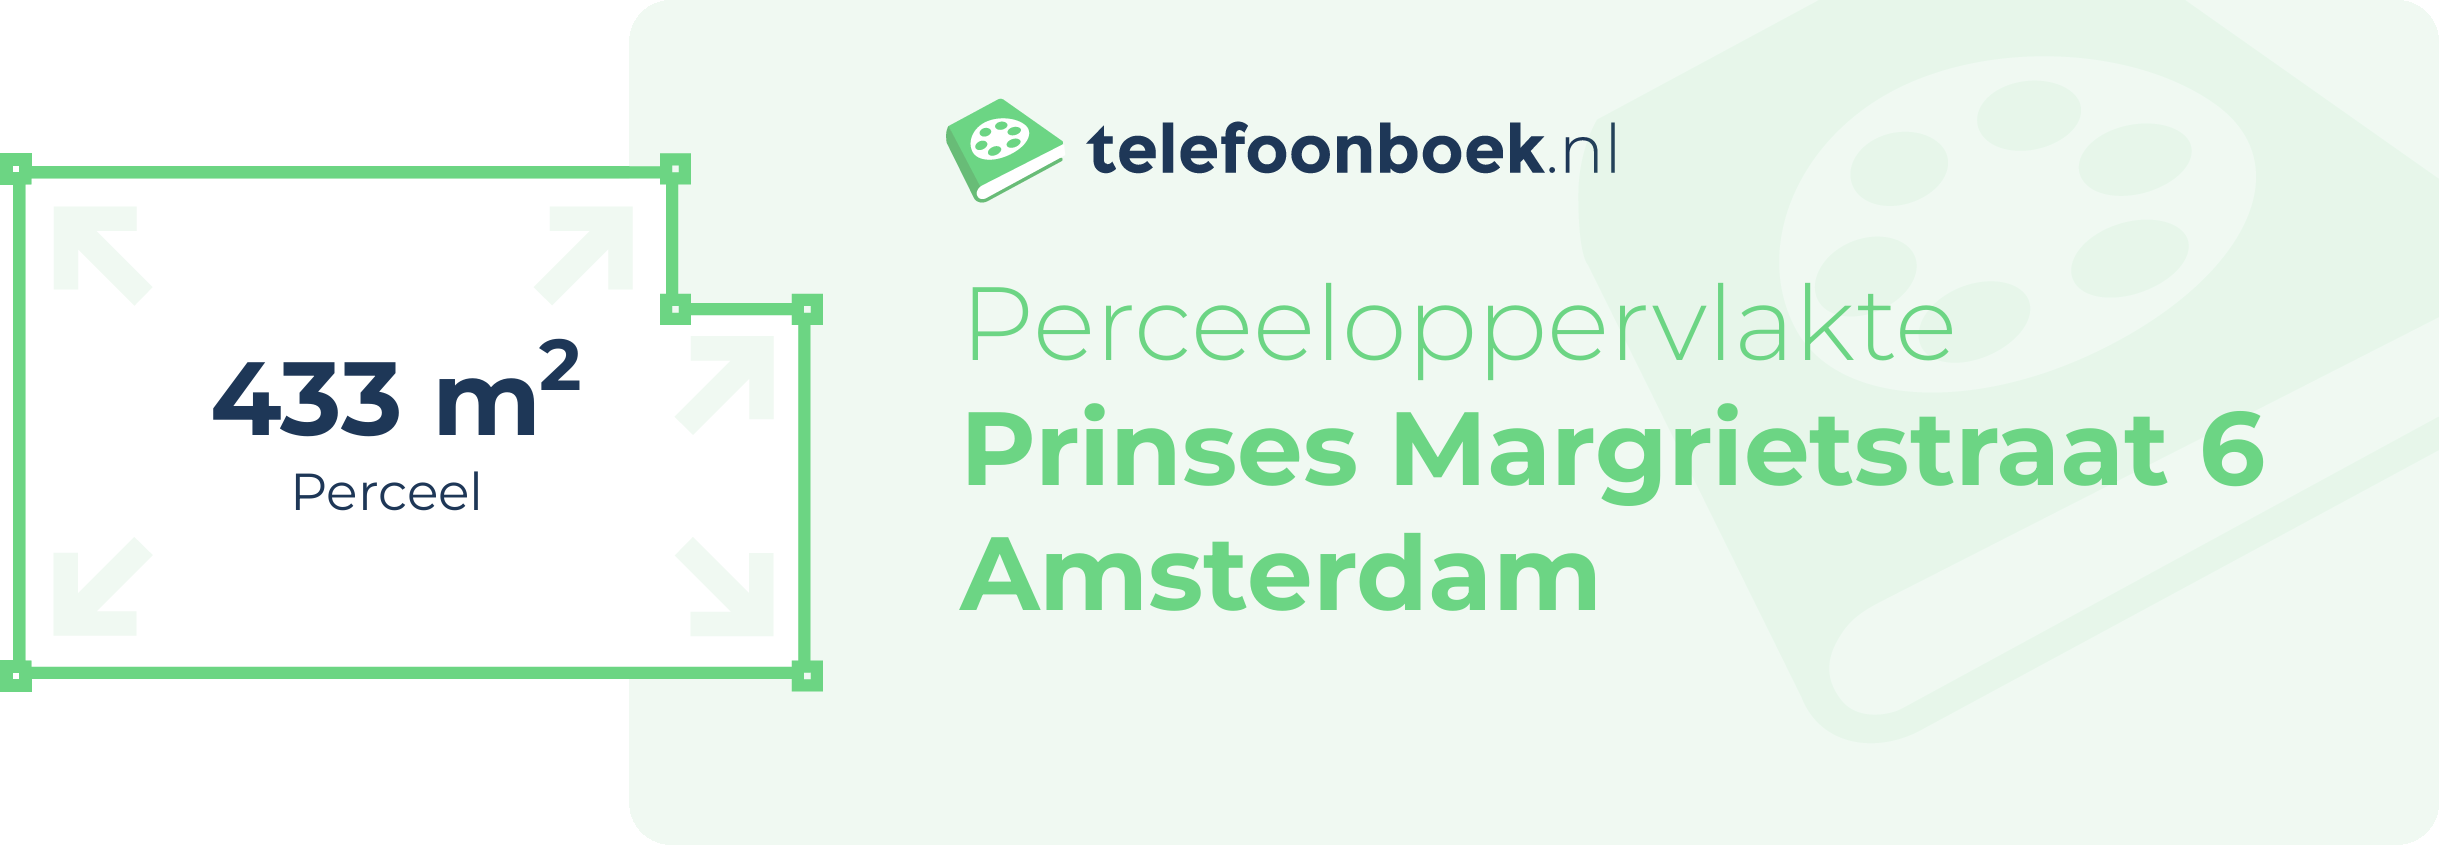 Perceeloppervlakte Prinses Margrietstraat 6 Amsterdam